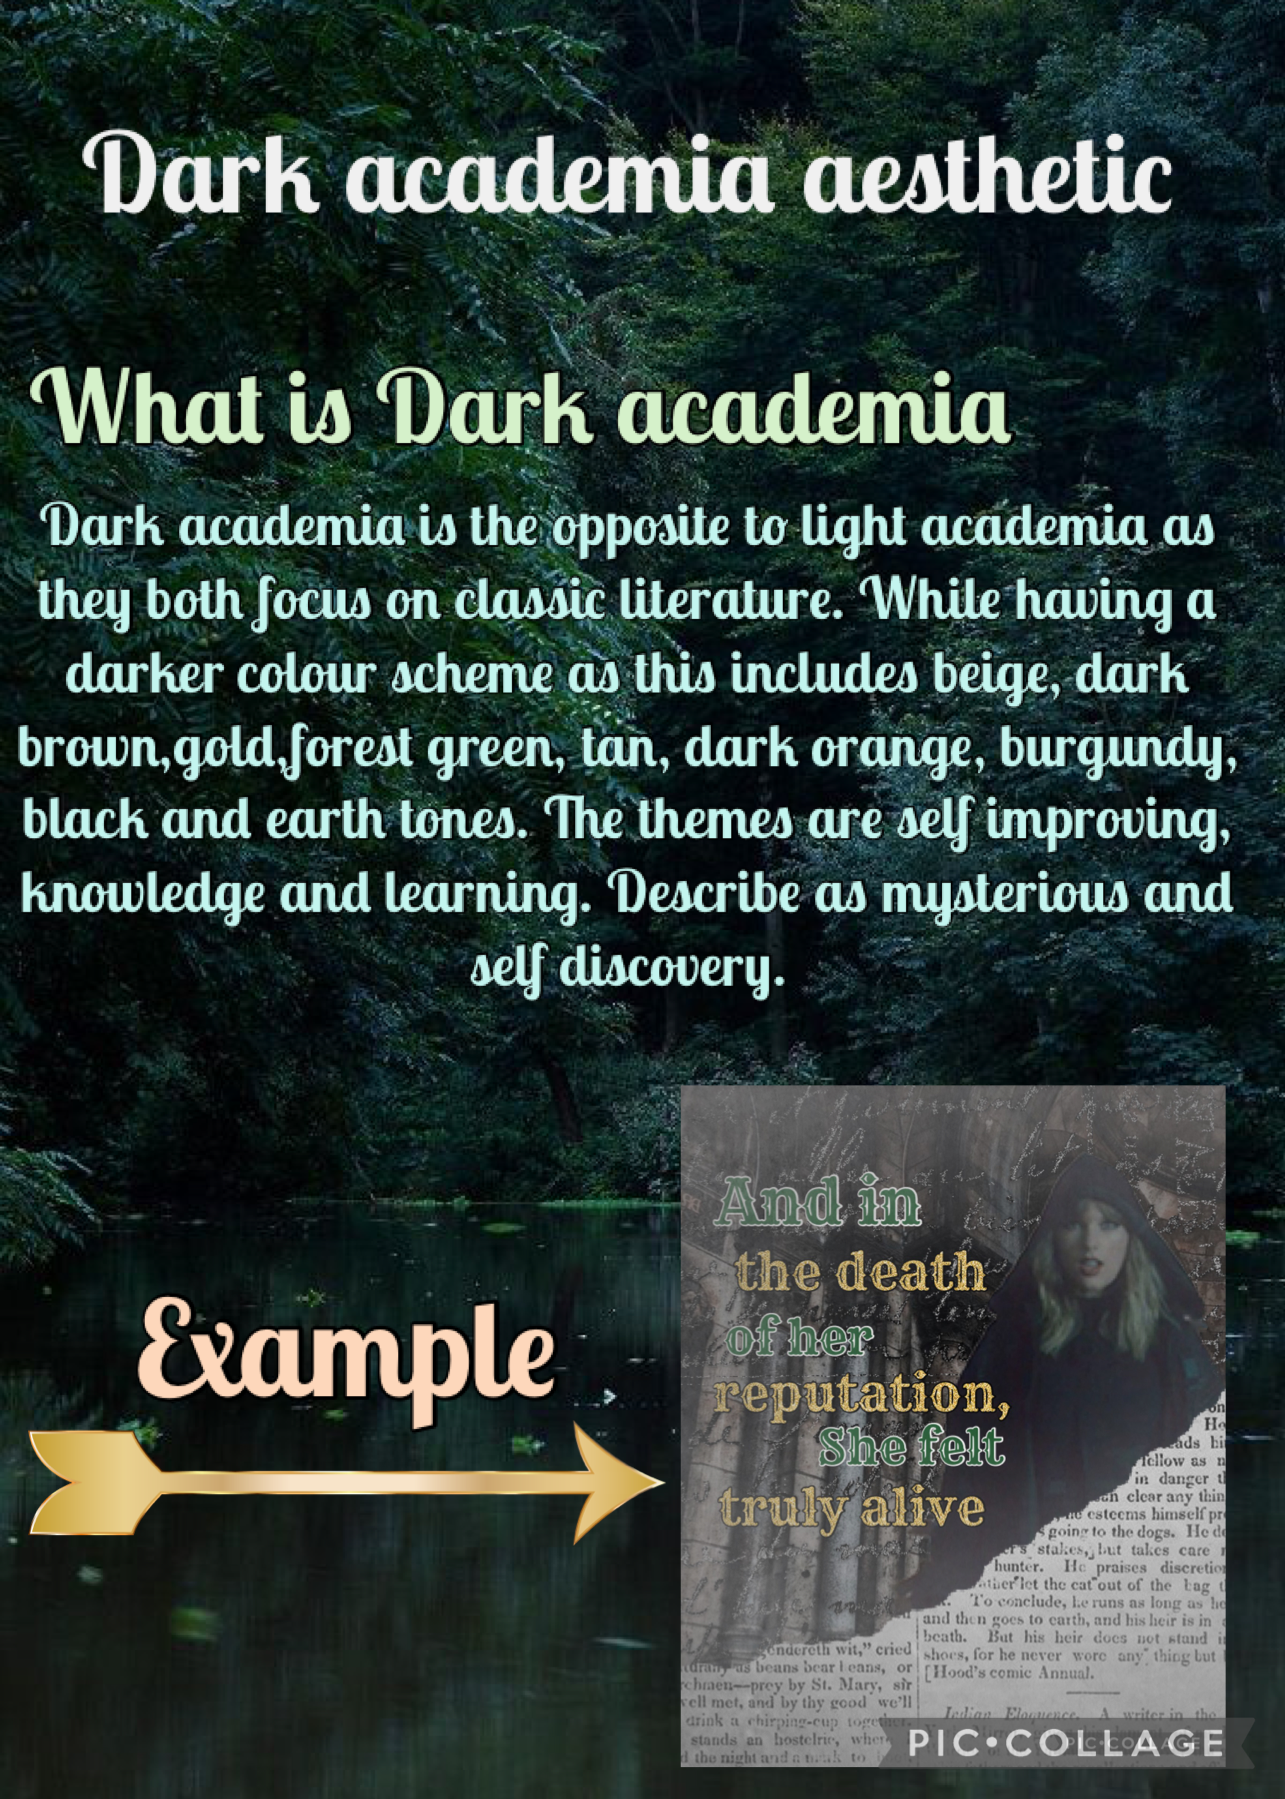 27.11.21 Dark academia aesthetic part of the aesthetic series 